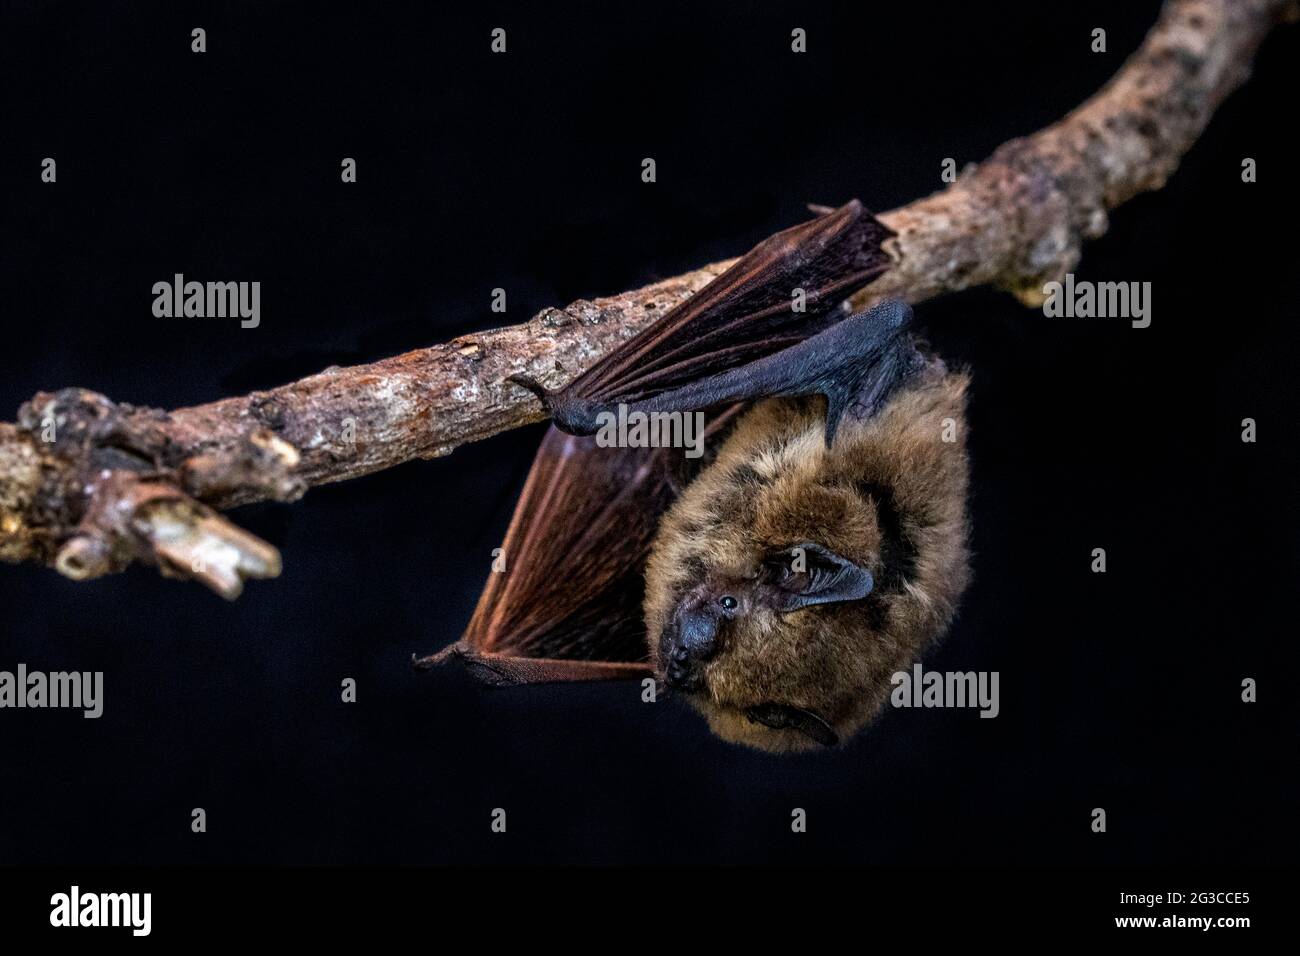 Bat de Pipistrello Común (Pipistrellus pipistrellus) Foto de stock